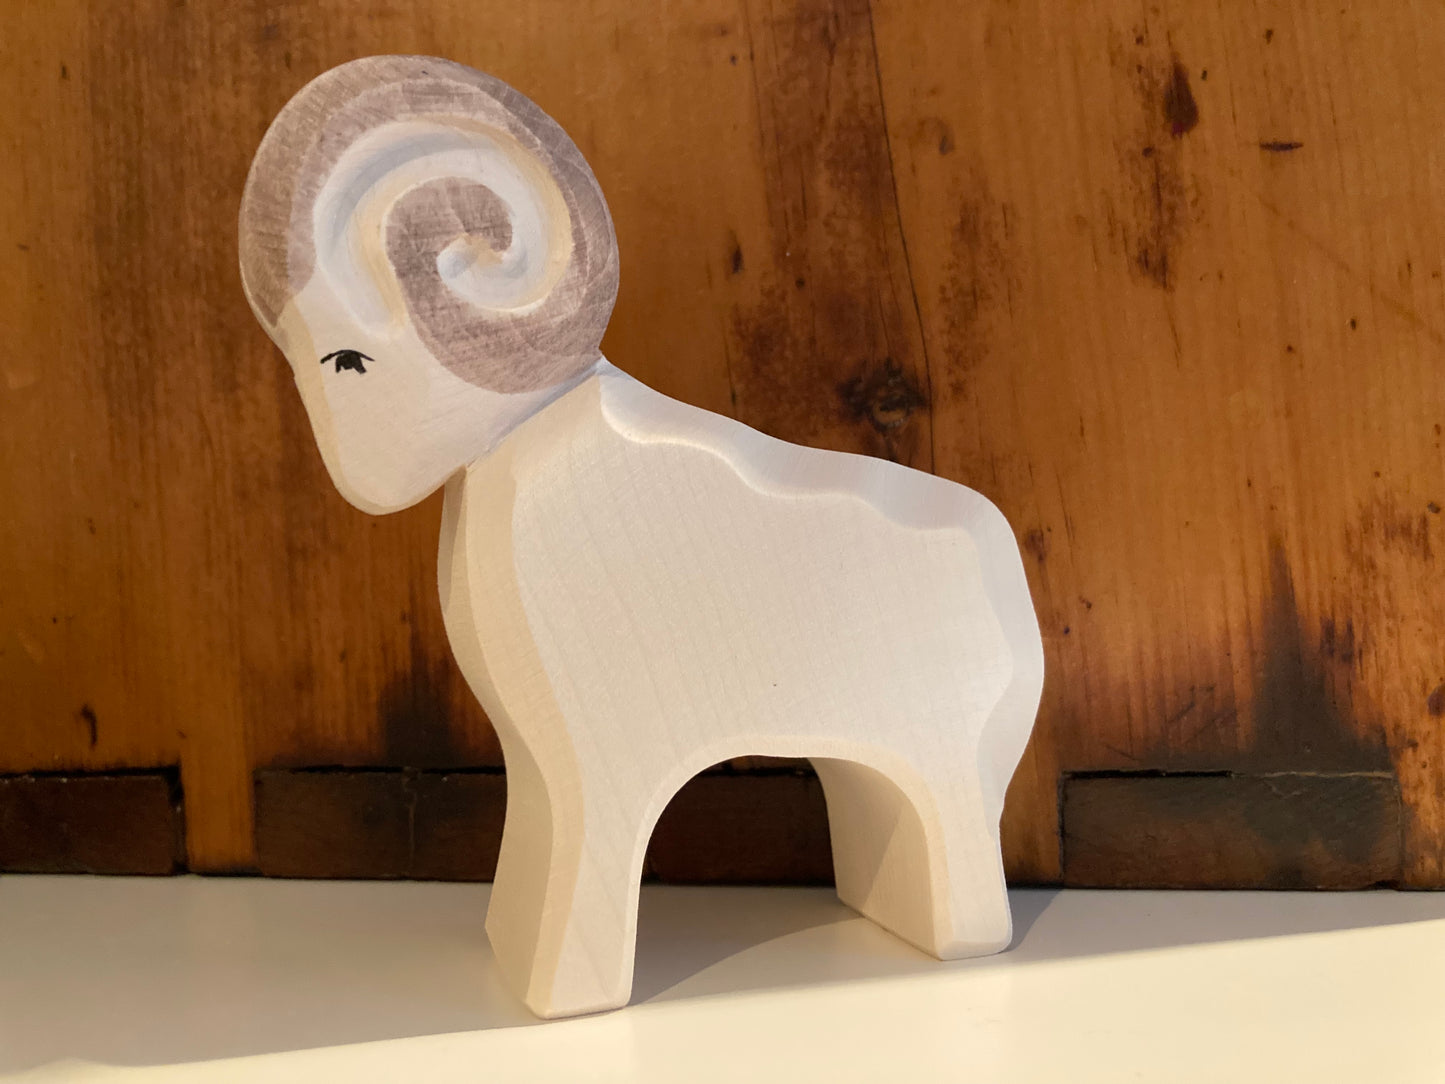 Wooden Dollhouse Play - SHEEP, WHITE RAM